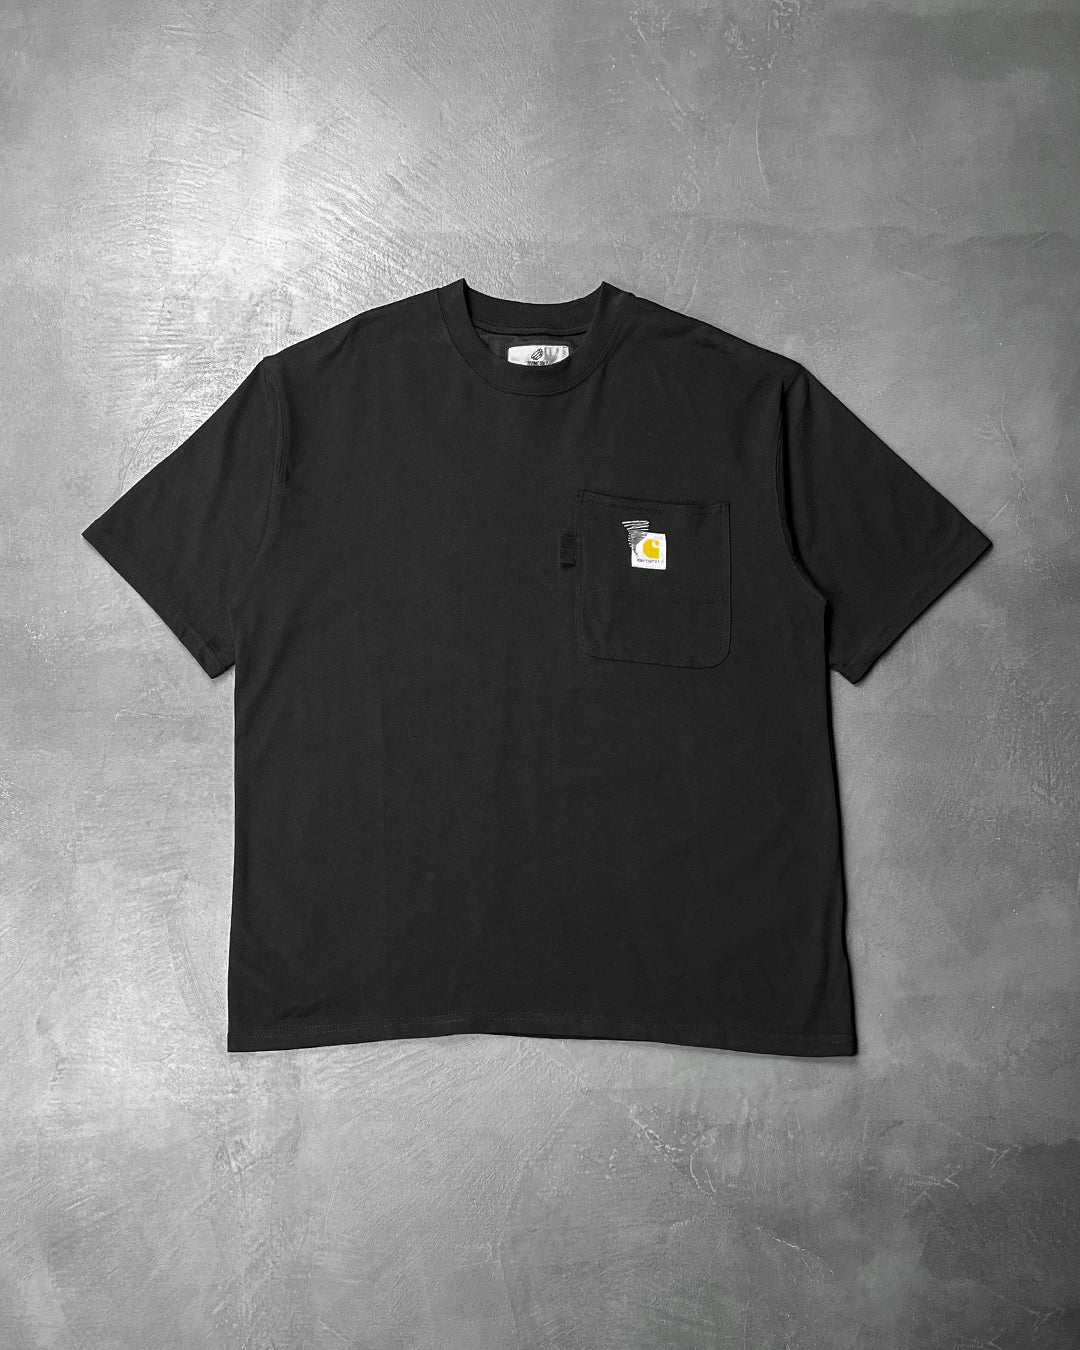 Carhartt WIP x Invincible S/S 15 Pocket T-Shirt Black